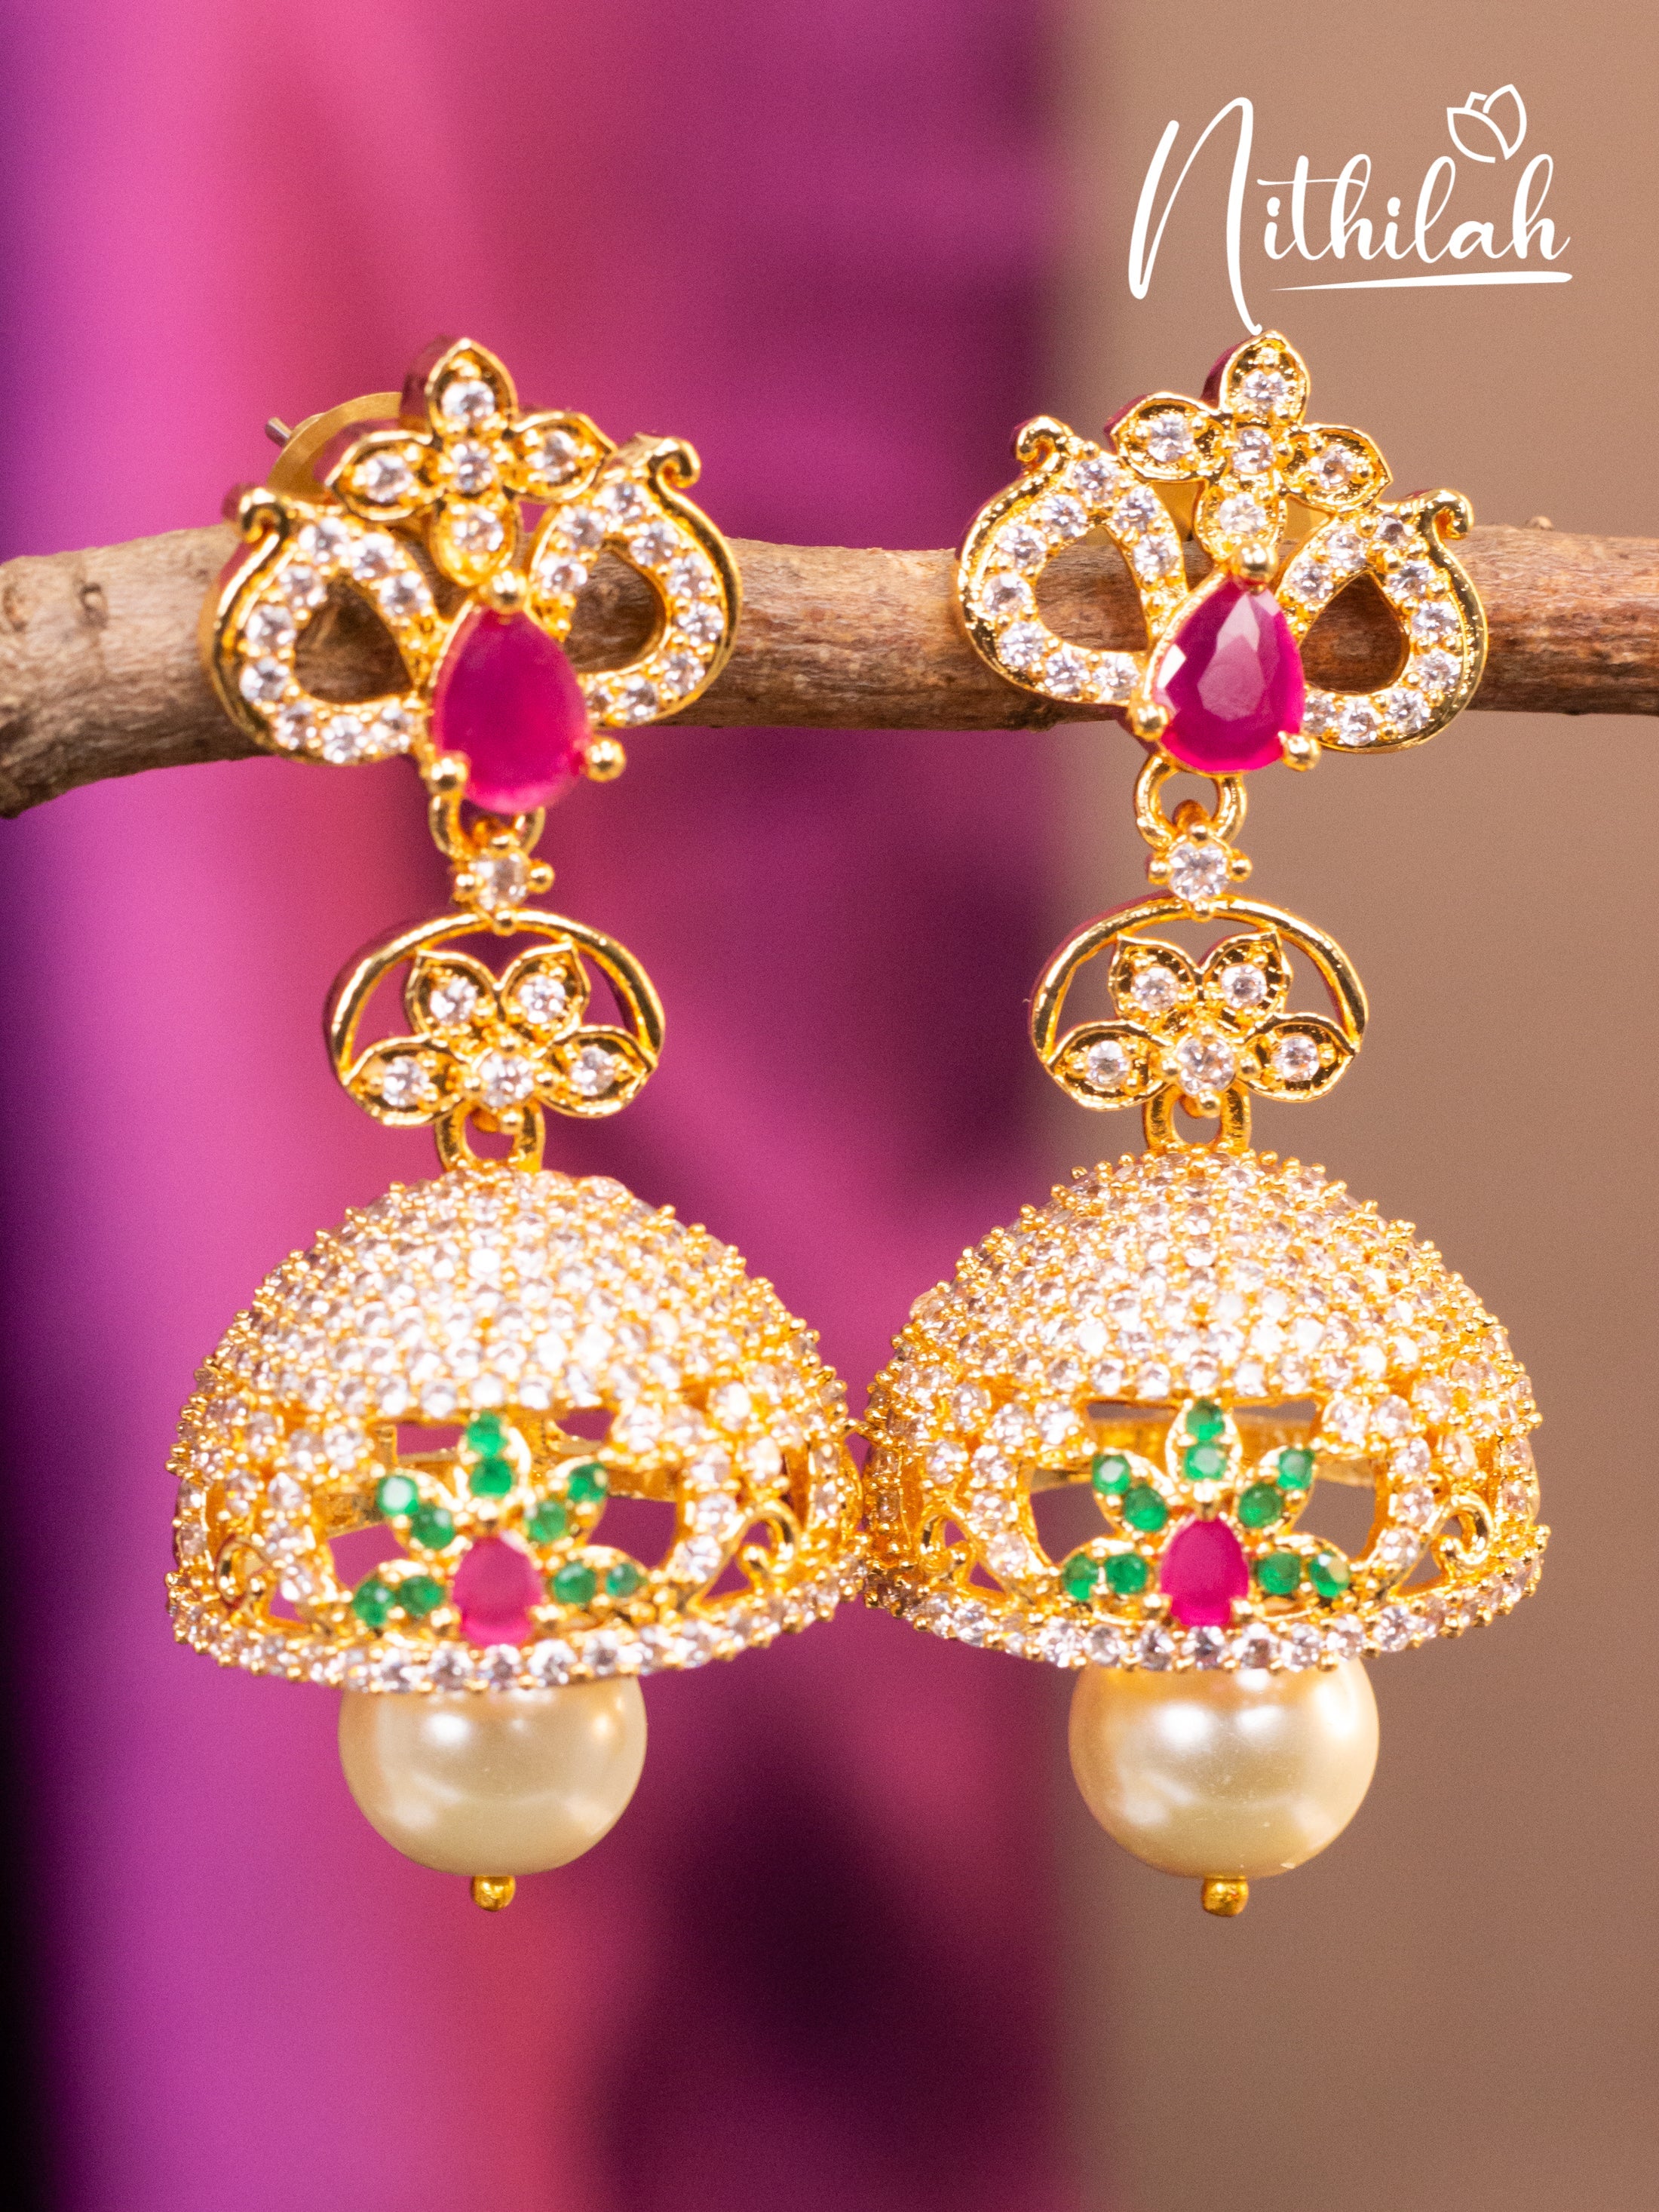 235-GER6650 - Chandbali Earrings(Temple Jewellery) - 22K Gold 'Peacock'  Drop Earrings with Ruby, Emerald, Cz & Pearls | Temple jewellery earrings,  Temple jewellery, Gold jewelry indian